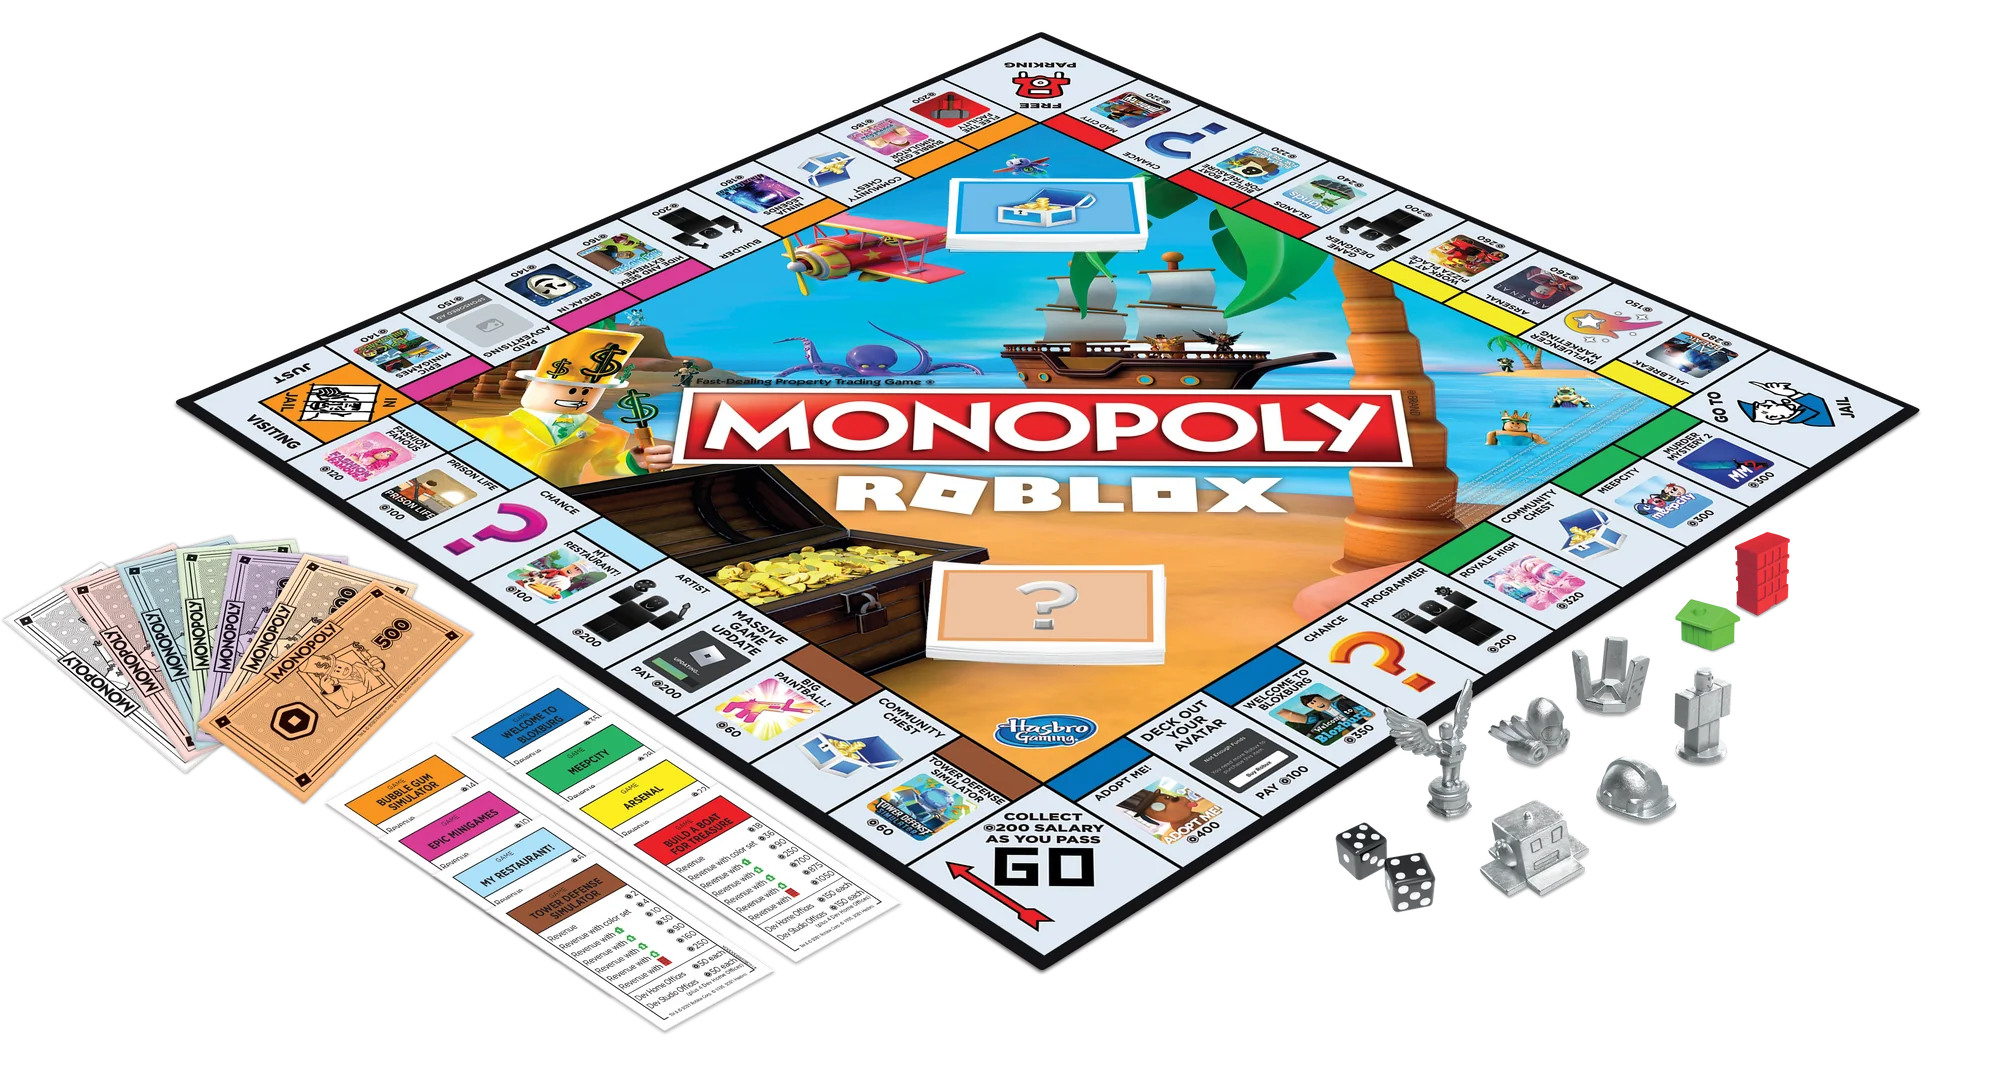 Monopoly Monopolio Clasico 100% Original Hasbro